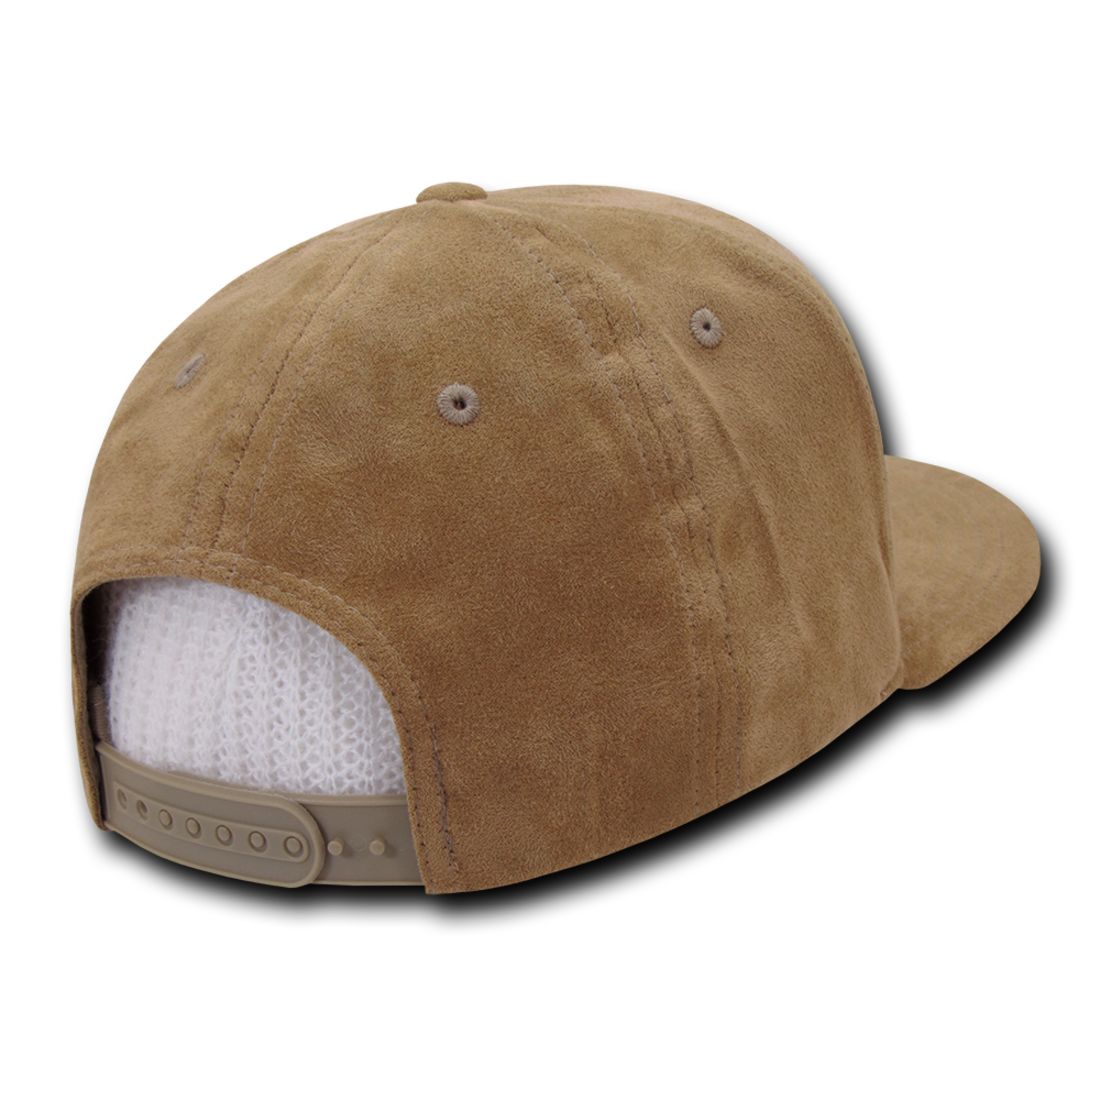 Decky 1091 Faux Suede Snapback Hats 6 Panel Flat Bill Baseball Caps Wholesale